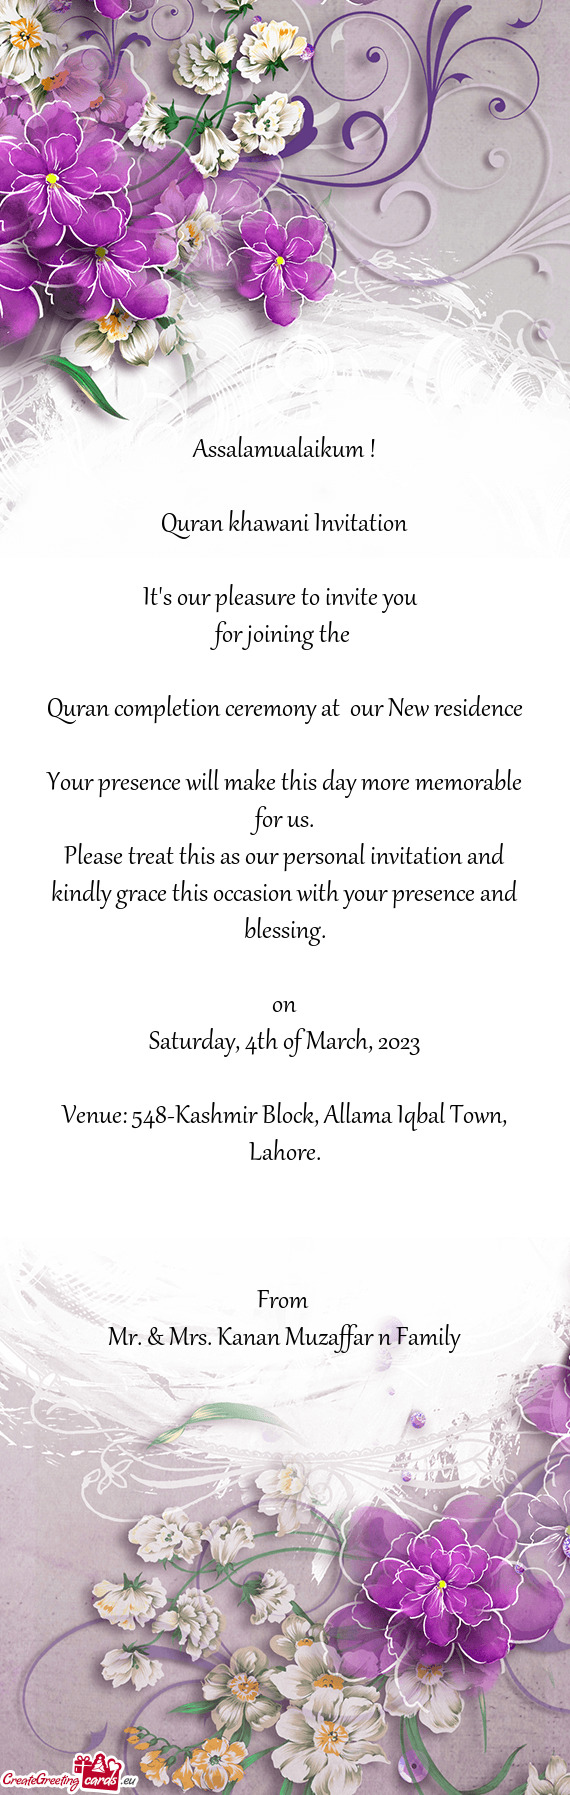 Venue: 548-Kashmir Block, Allama Iqbal Town, Lahore